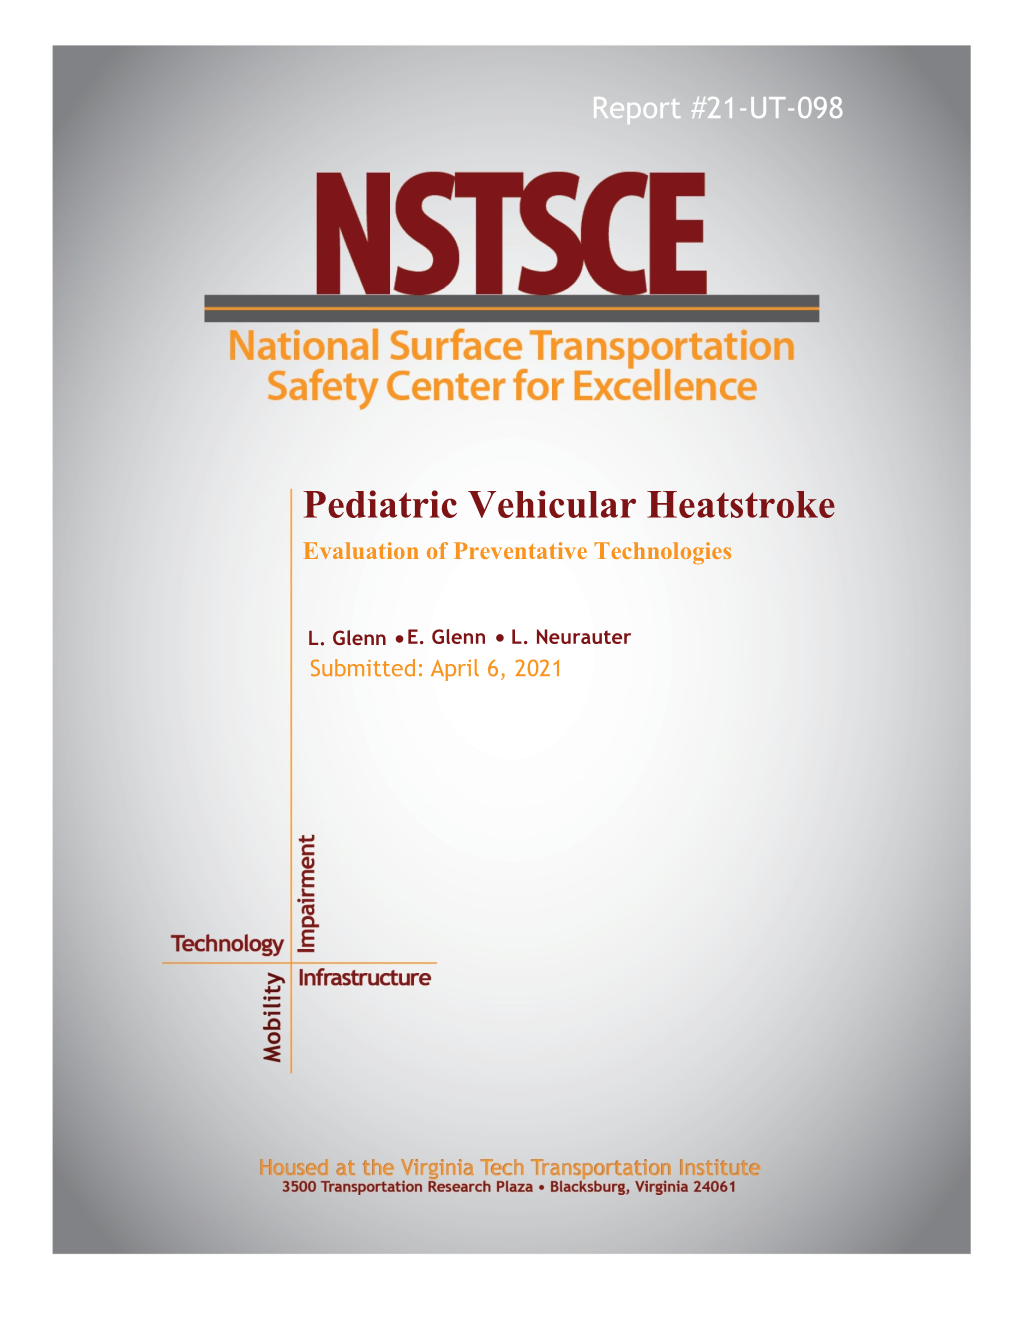 Pediatric Vehicular Heatstroke Evaluation of Preventative Technologies